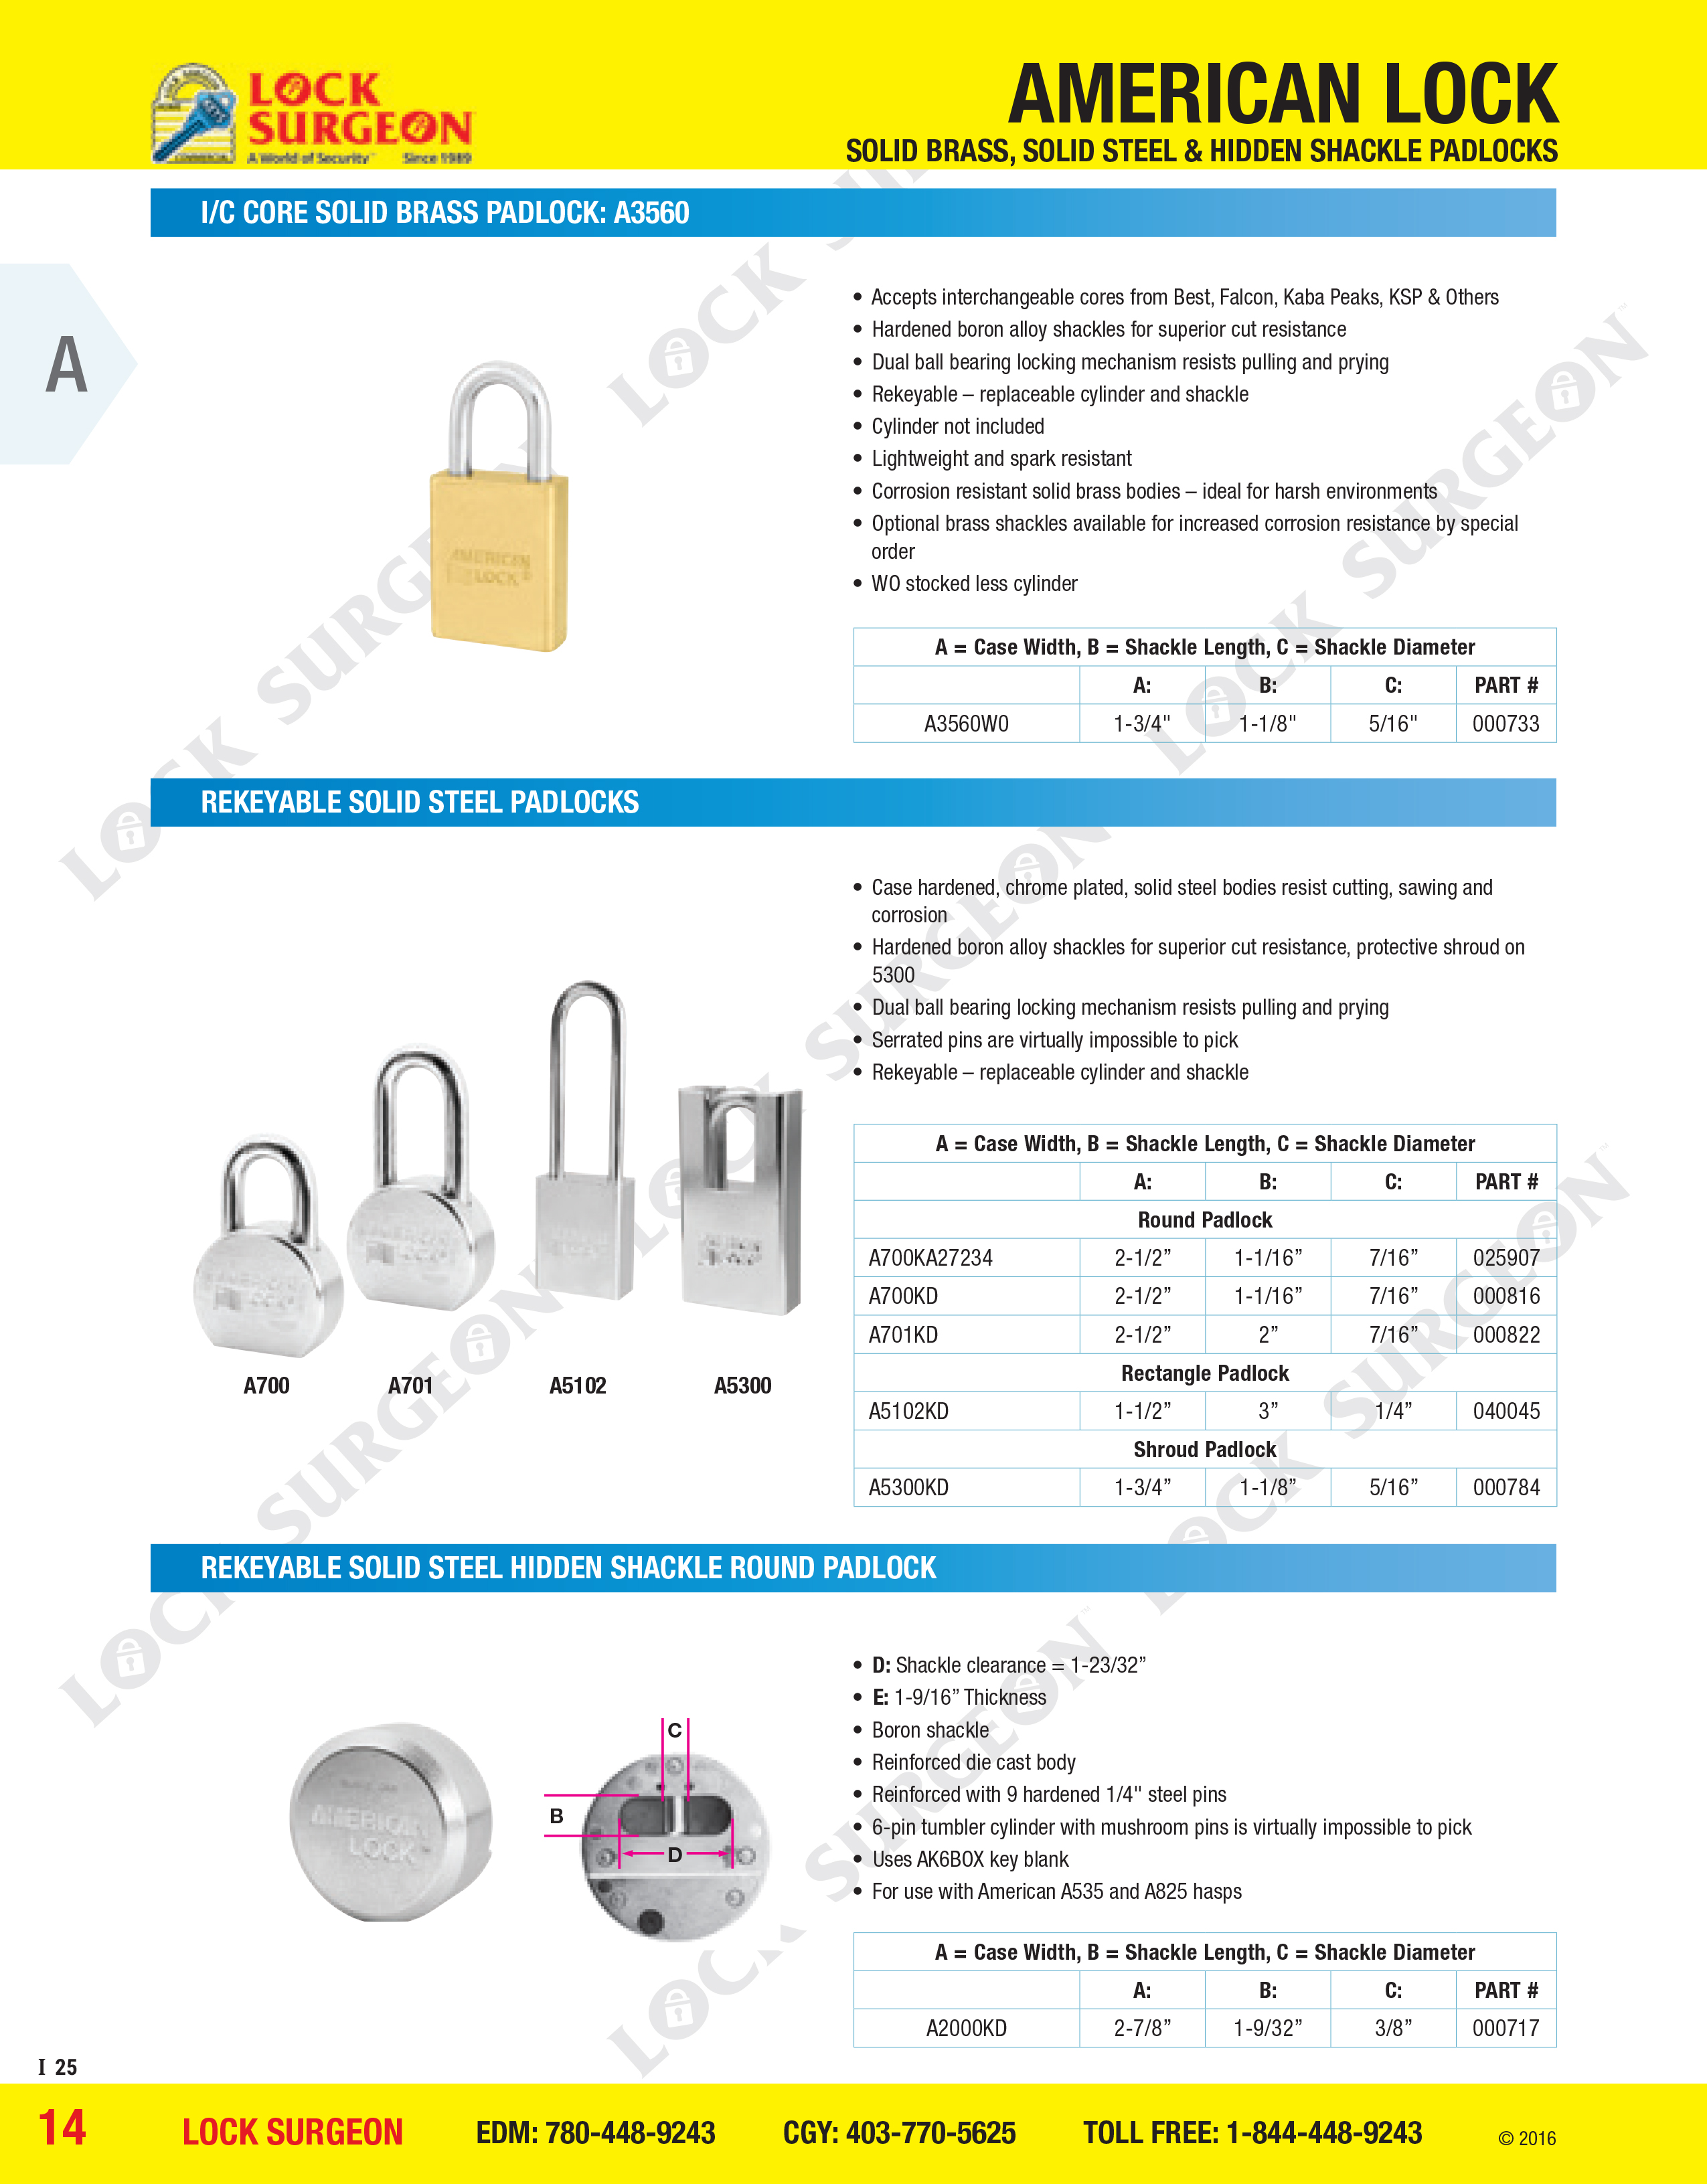 IC-Core solid brass padlock A3560, Rekeyable solid steel padlocks & hidden shackle round padlock.